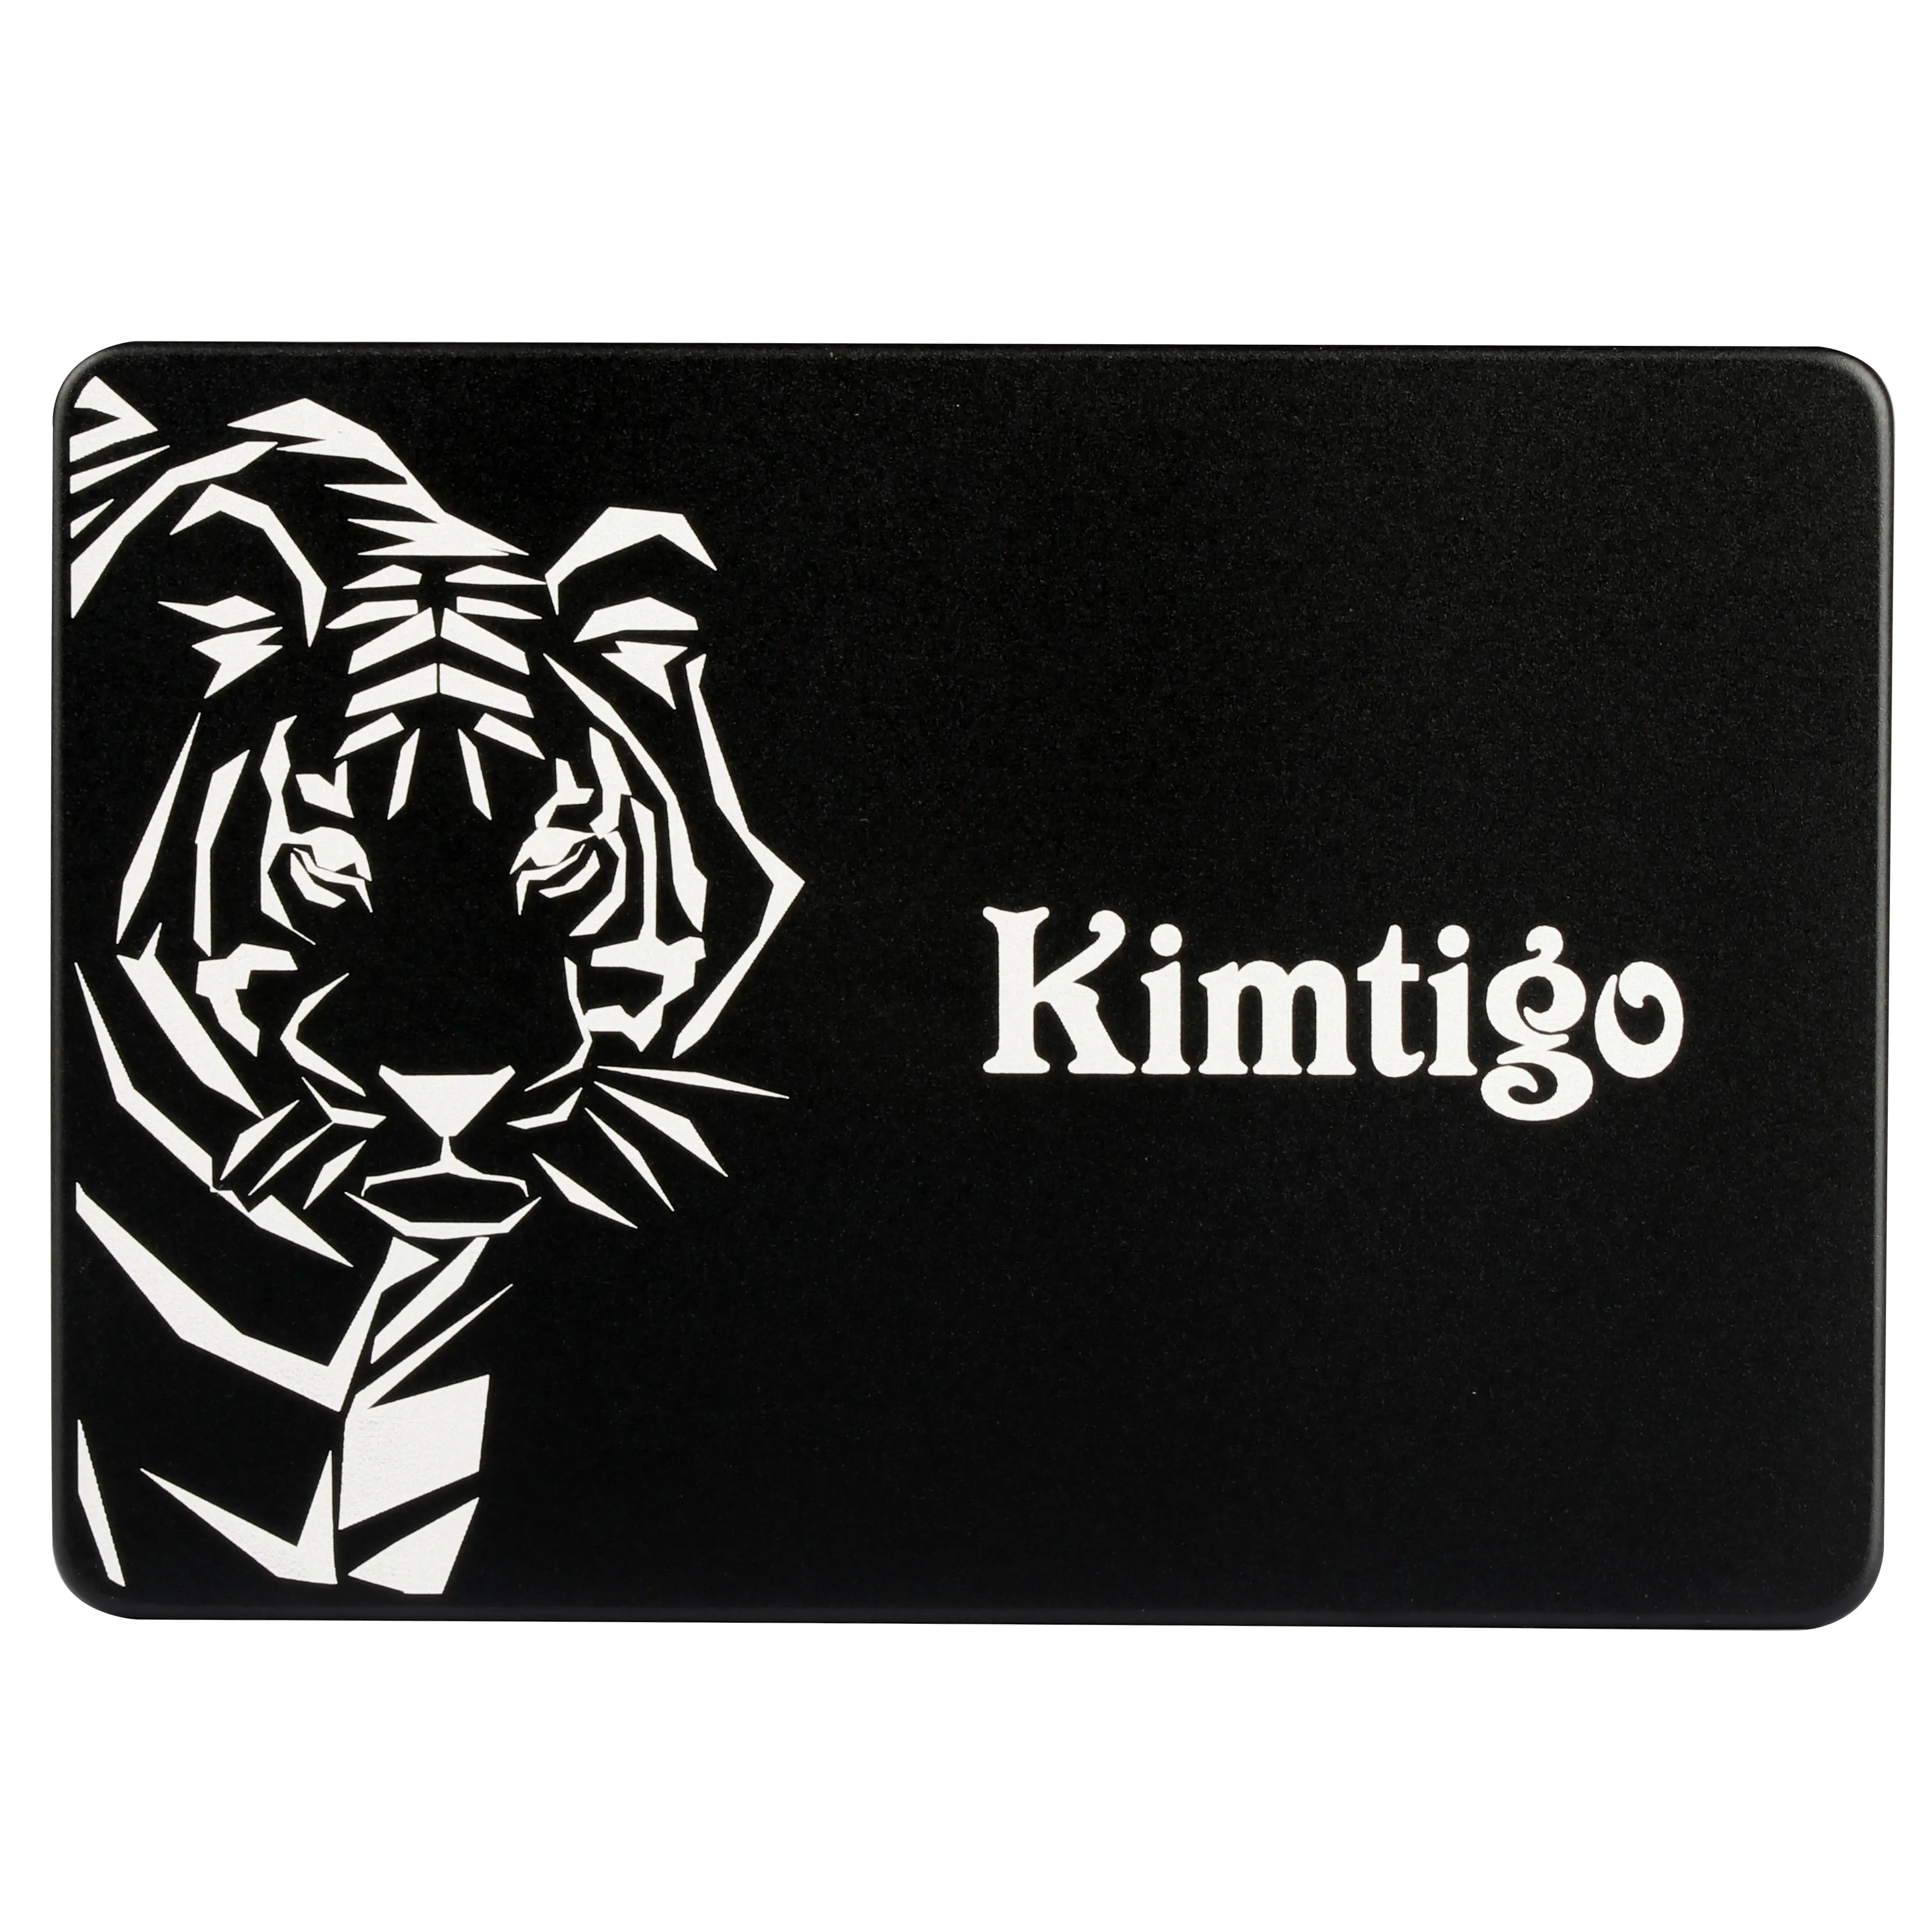 Kimtigo 도매 OEM SATA 3 2.5 인치 SSD 솔리드 스테이트 하드 드라이브 SSD 외장형 하드 드라이브 노트북 데스크탑 및 PC